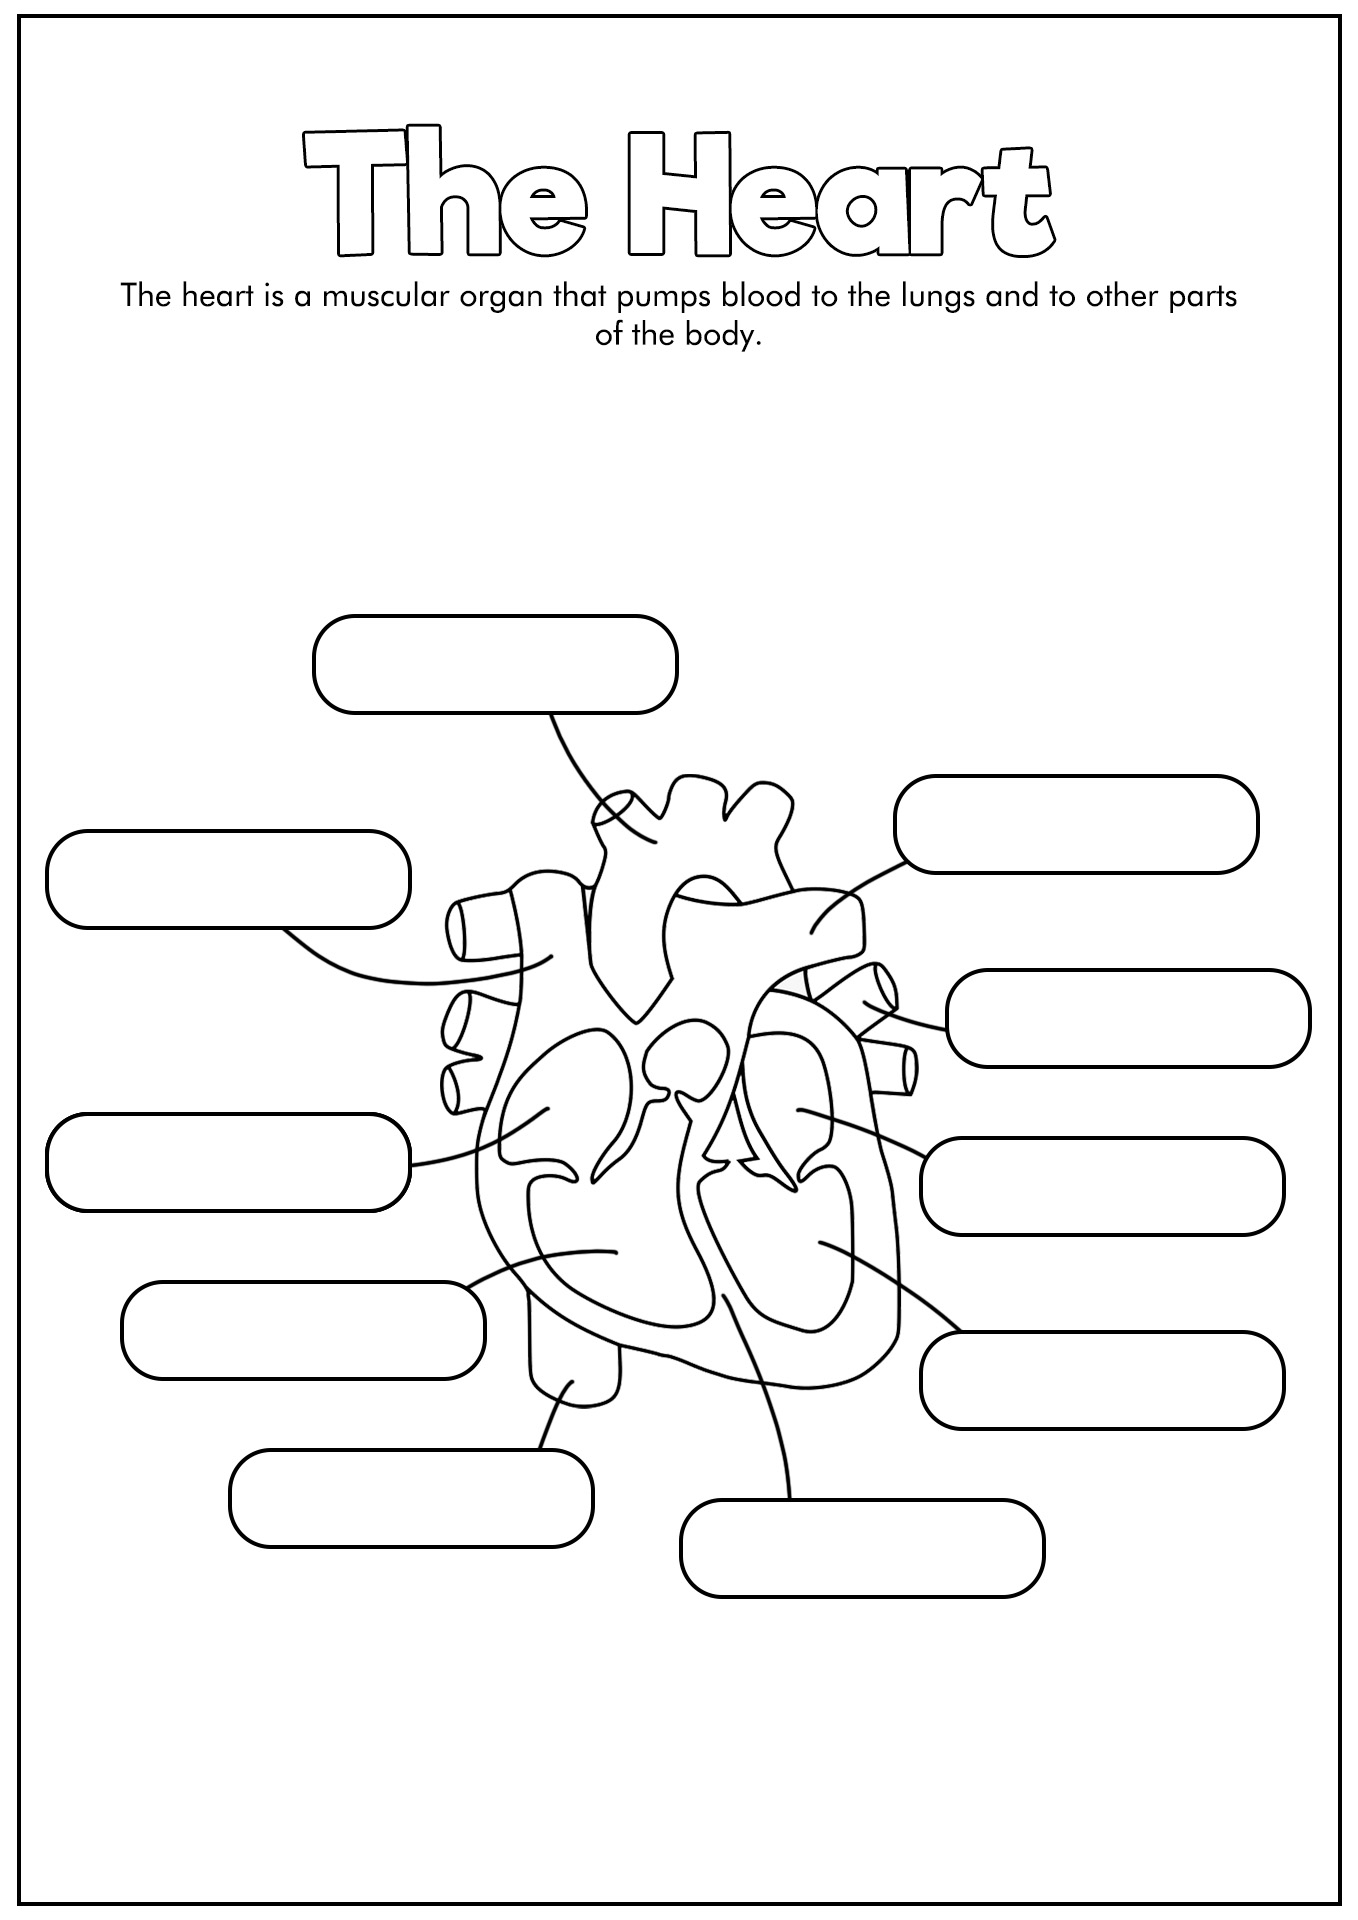 Circulatory System Worksheet Answer Key Image